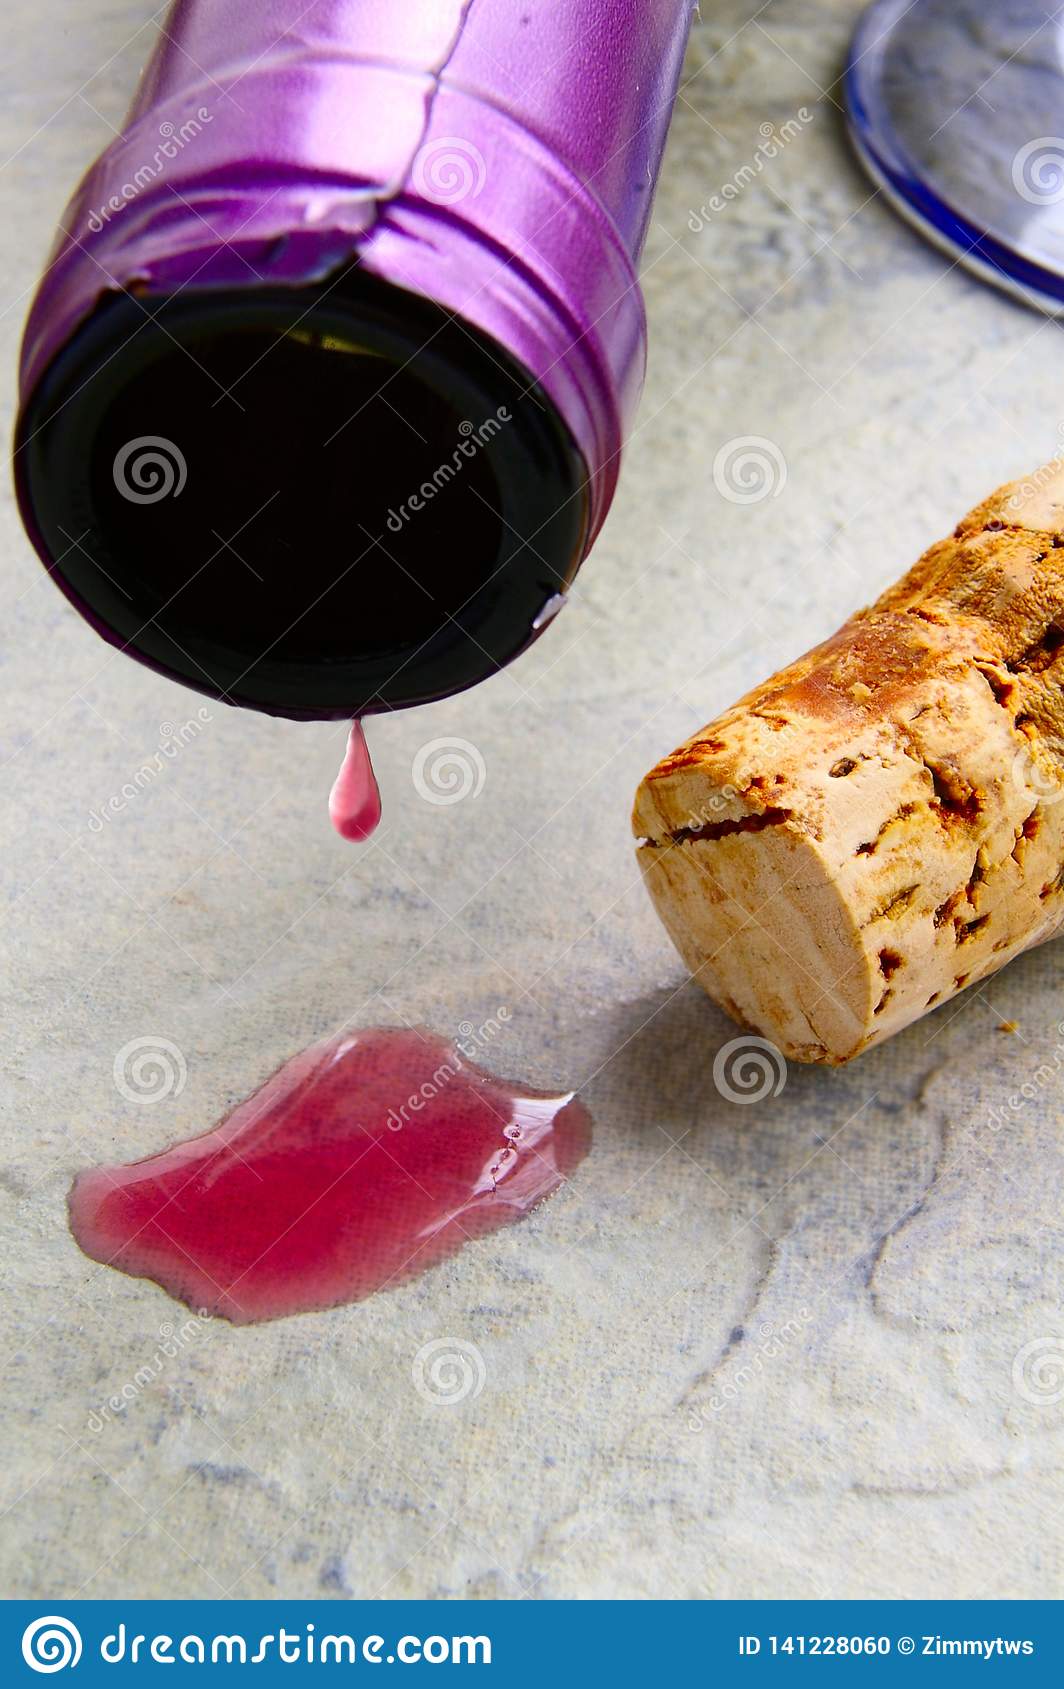 Wine Stain On Granite Counter Top Stock Photo